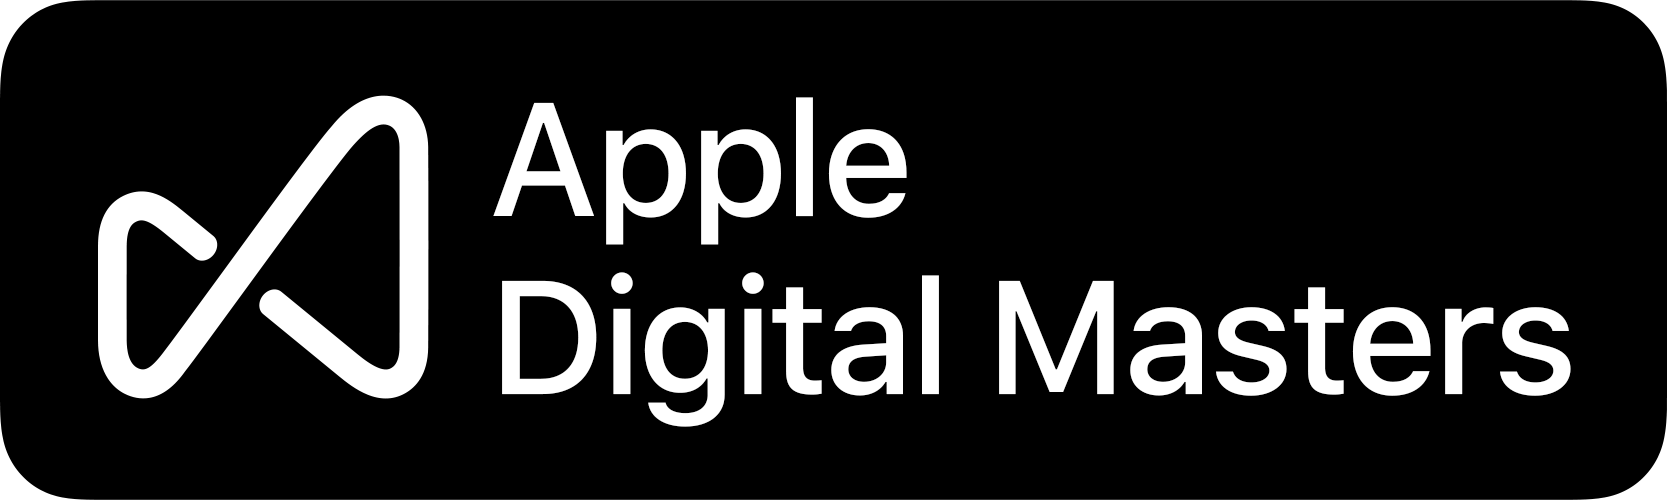 label apple digital masters